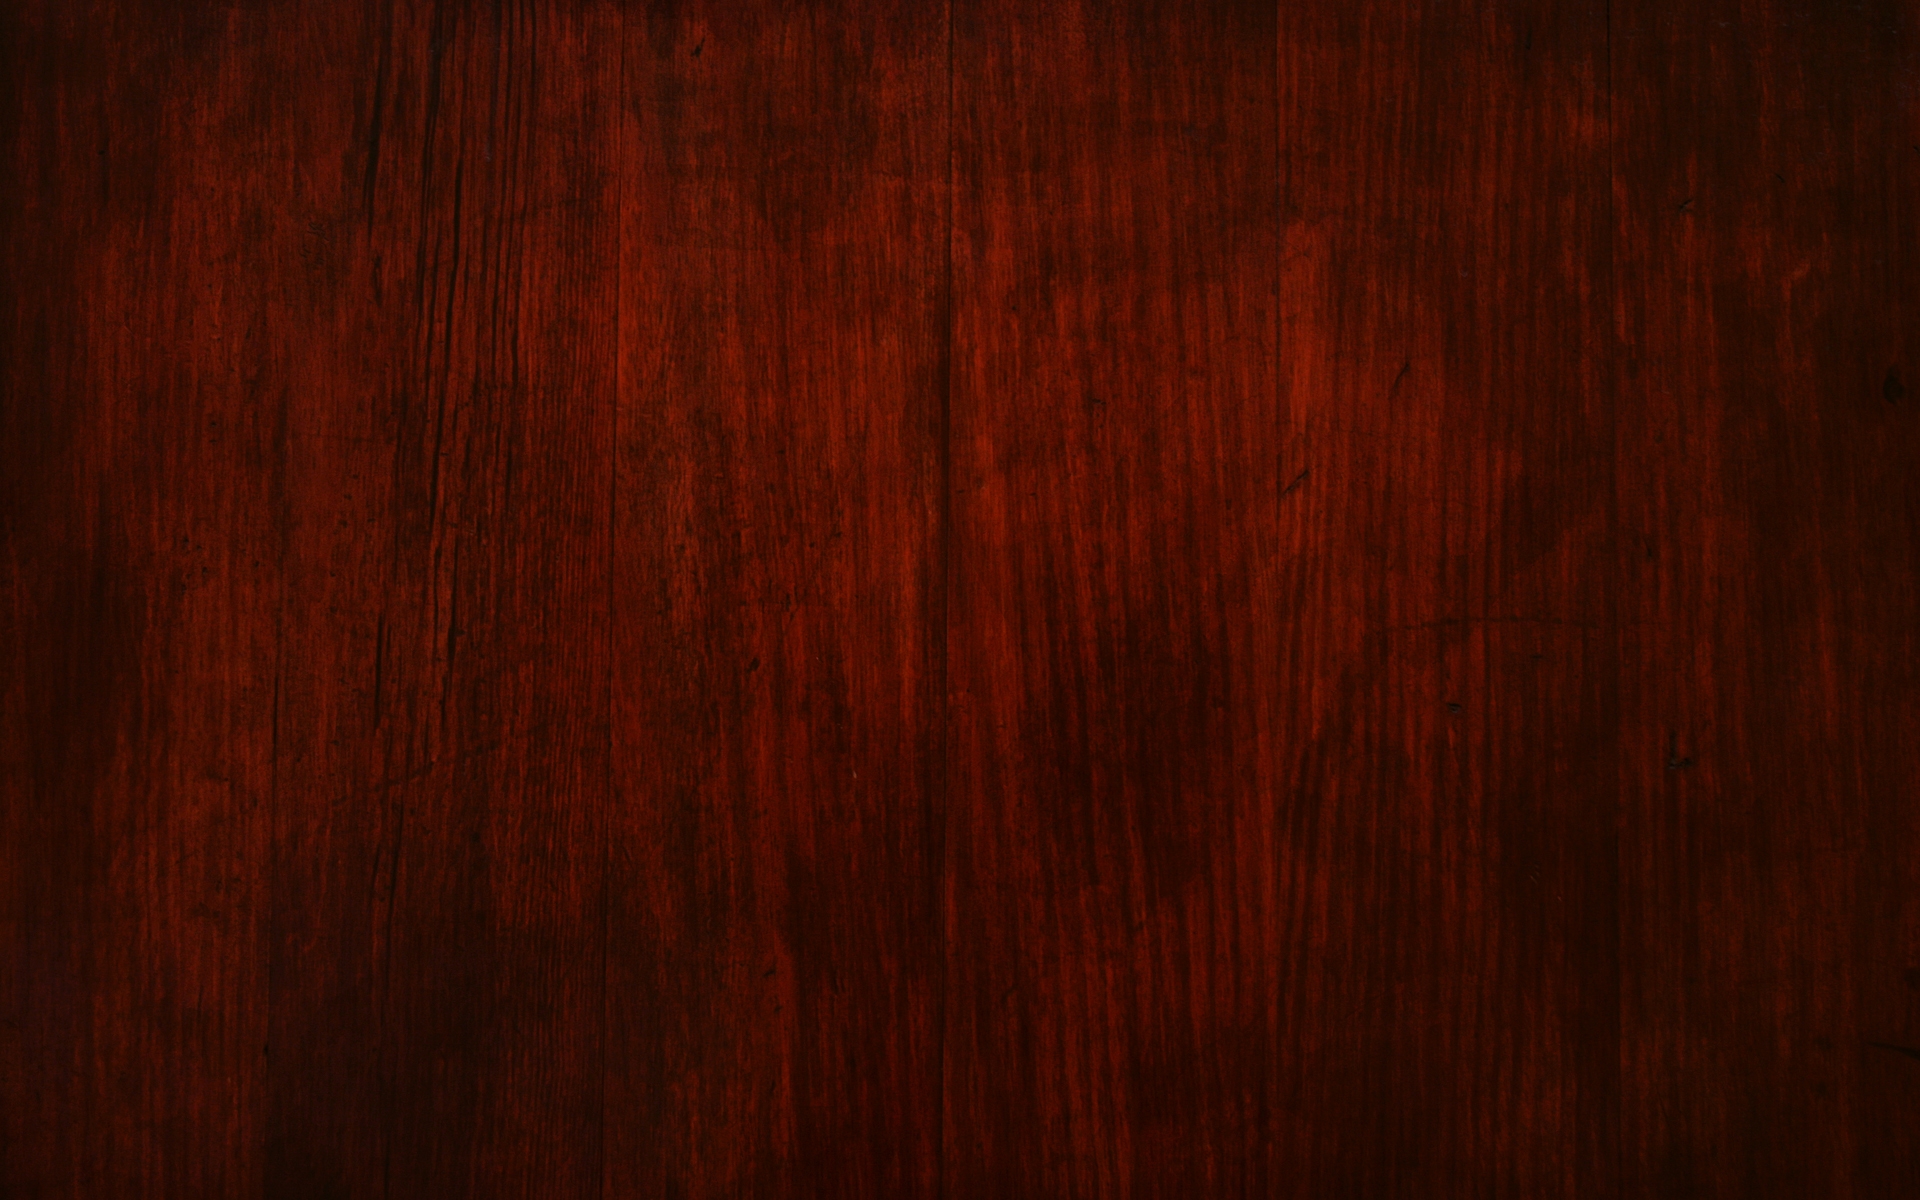 Wallpaper, black, red, brown, texture, floor, darkness, board, hardwood, plywood, computer wallpaper, wood flooring, wood stain, laminate flooring, varnish, plank, lacquered 1920x1200